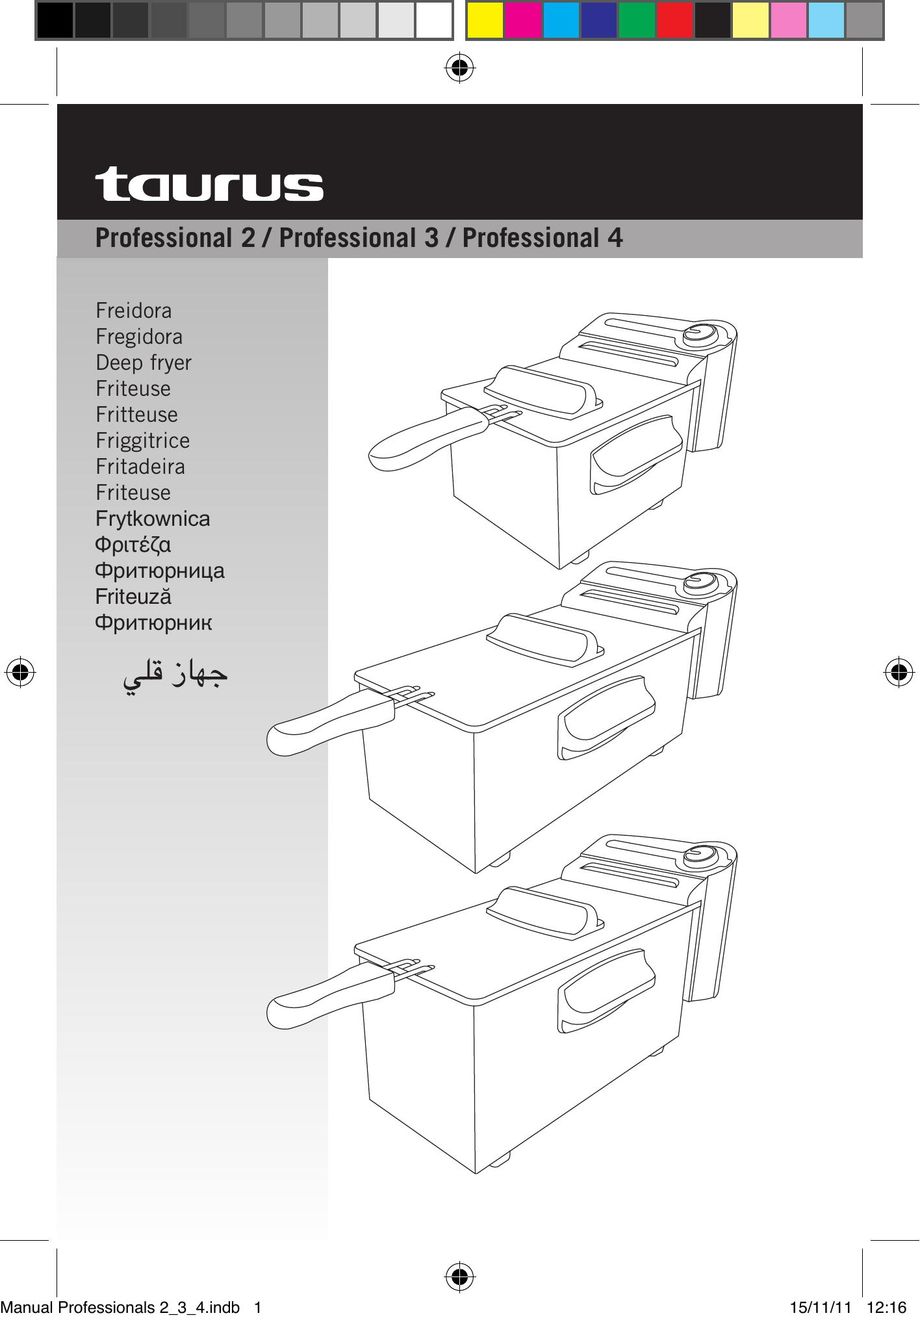 Taurus Group Professional 3 Fryer User Manual